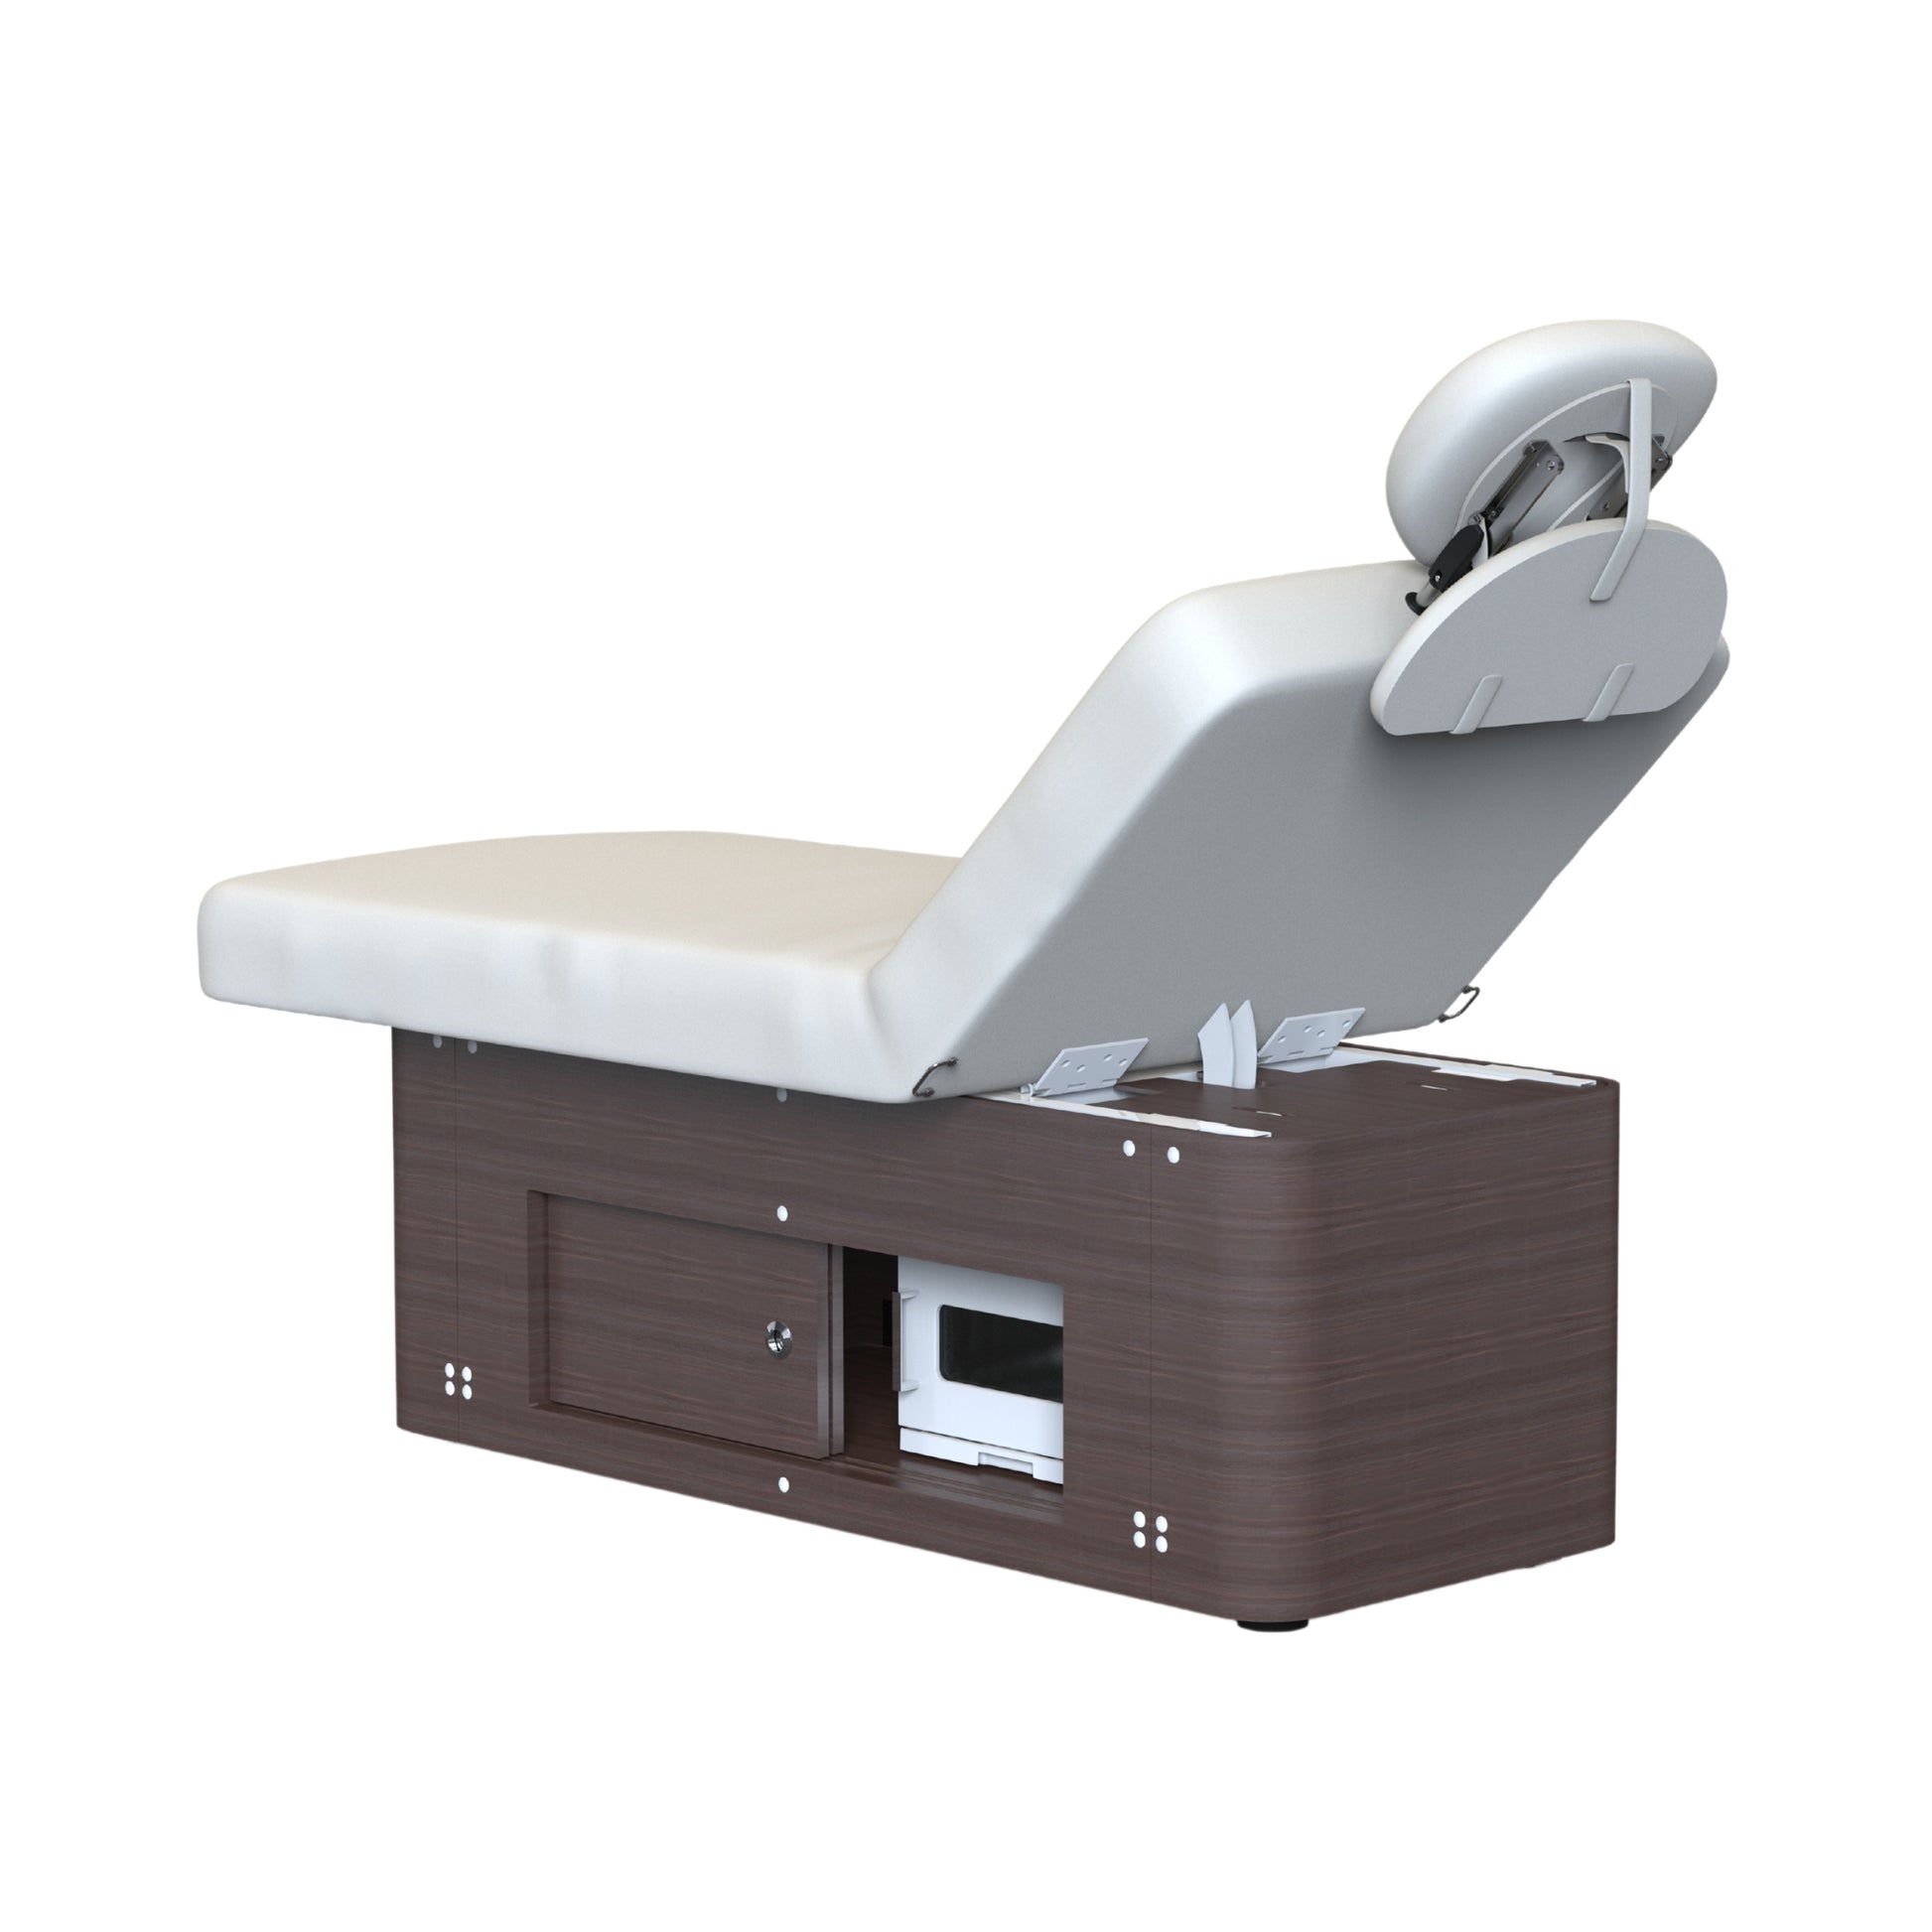 SoftSerene Massage Table - Silverfox 2285 - Sitting Position Back angle